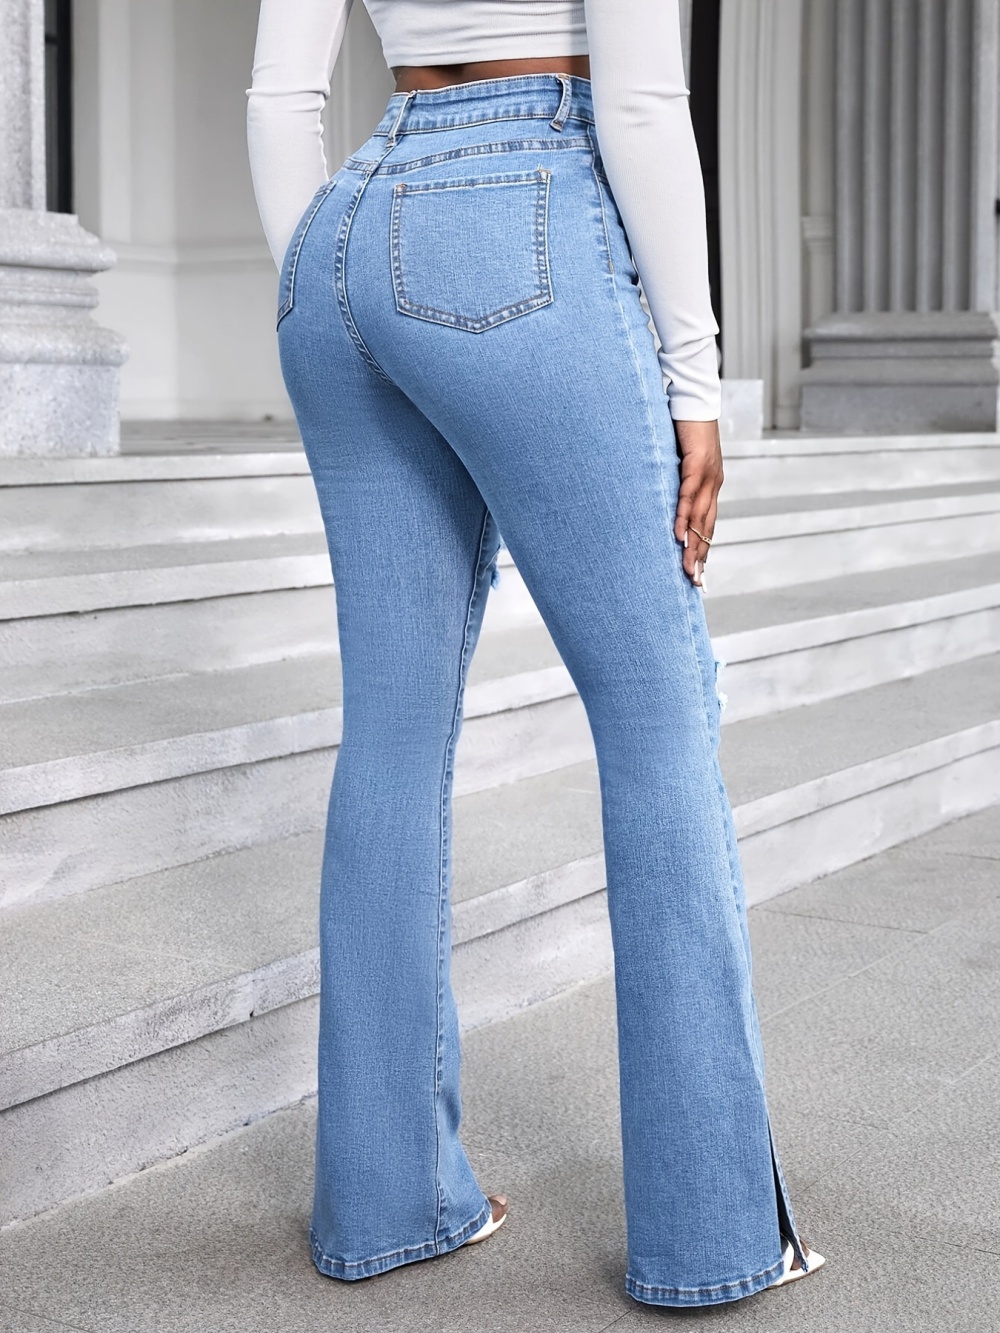 Fashion denim jeans European style flare pants for women